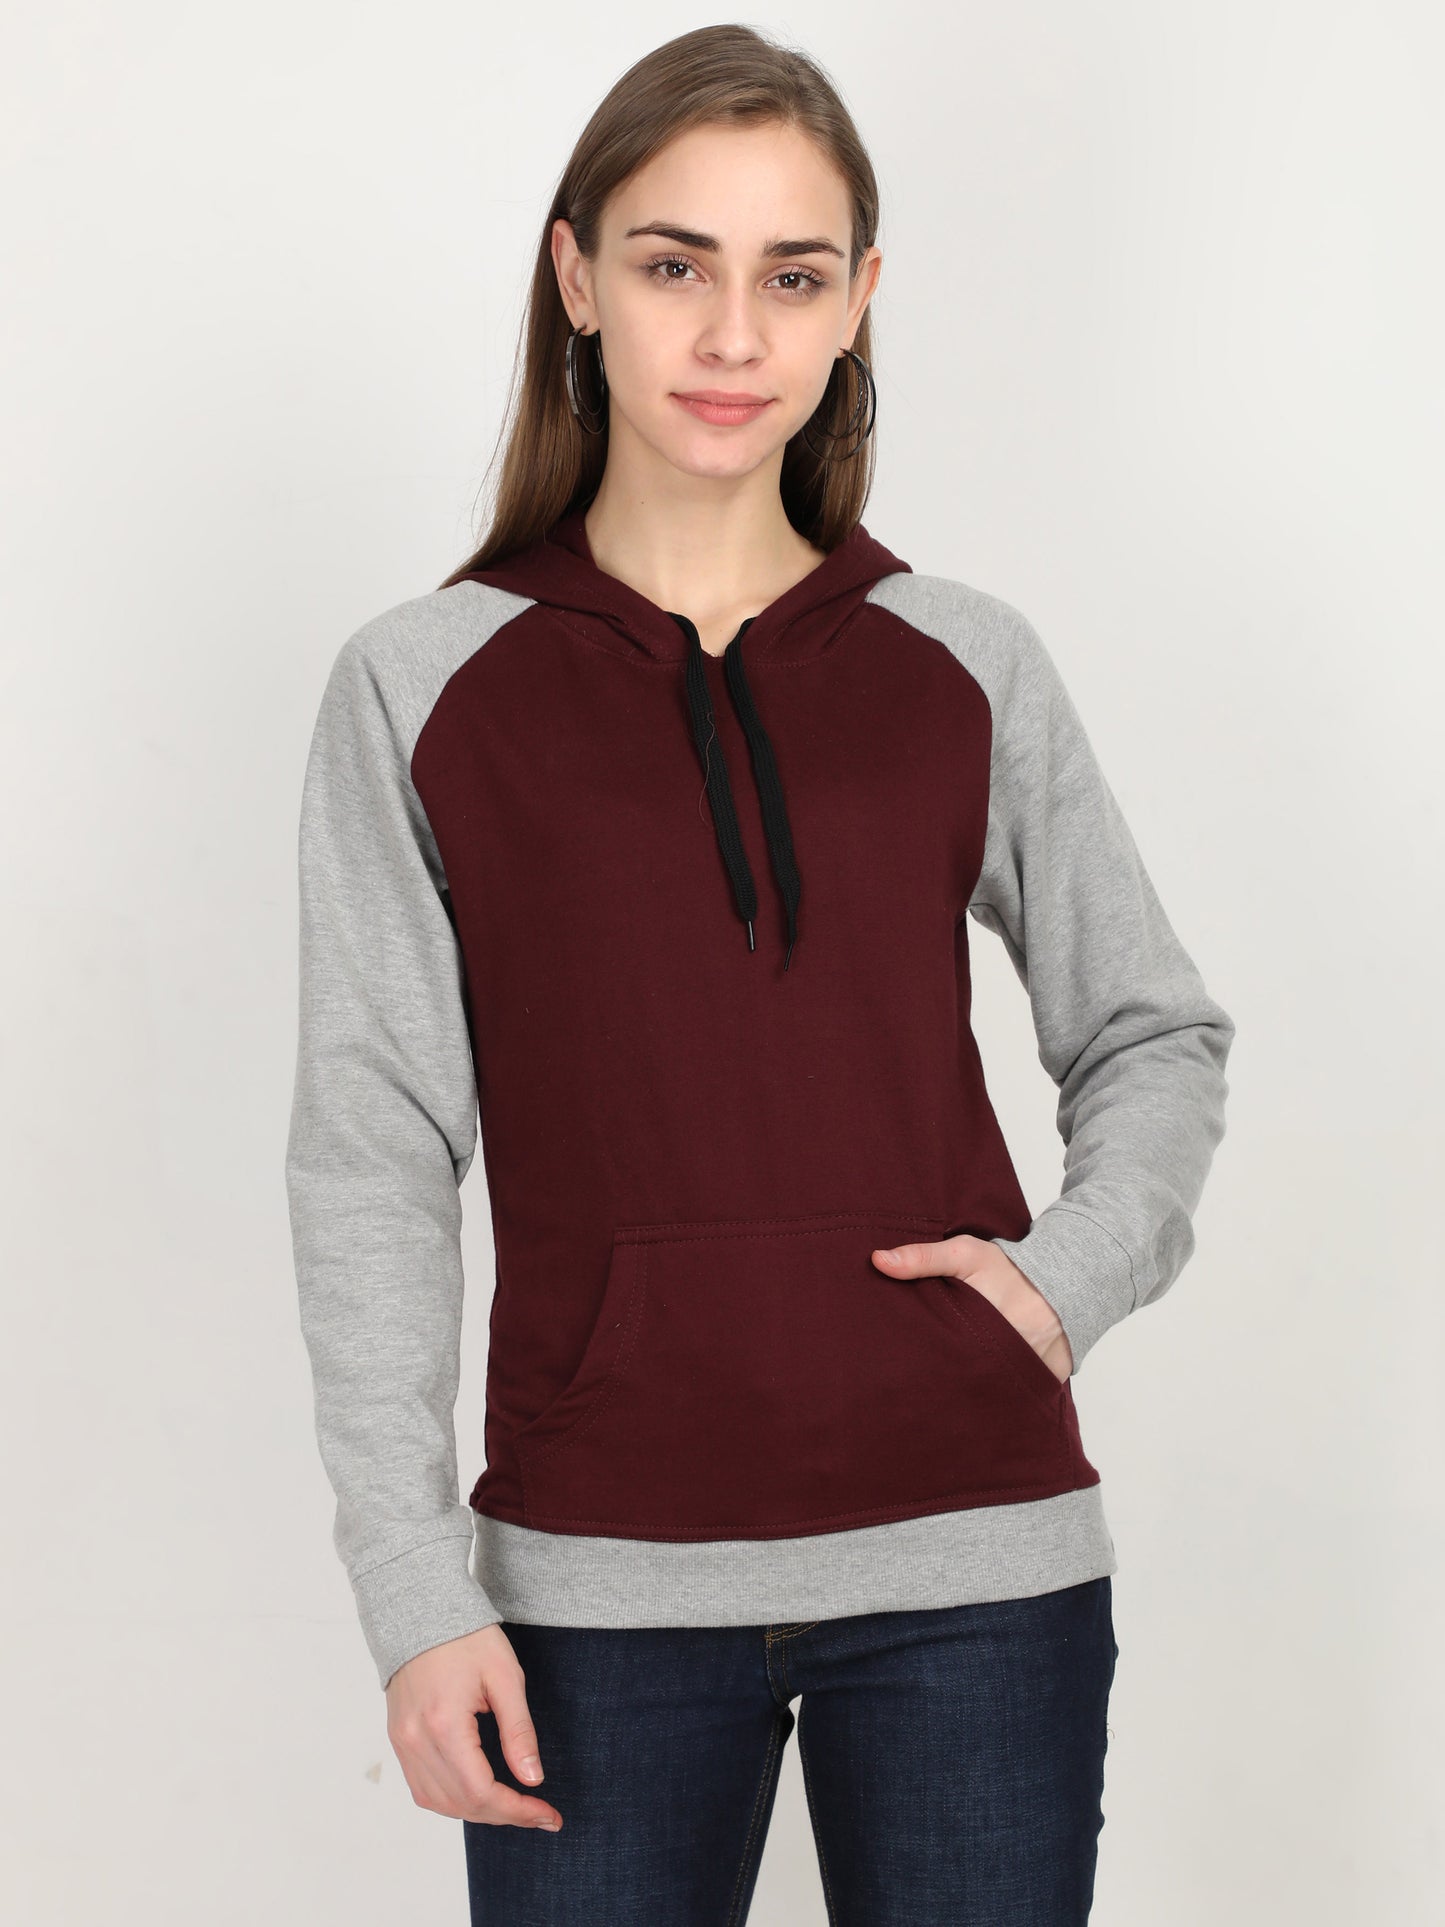 Women's Cotton Color Block Raglan Maroon & Grey Melange Color Full Sleeve Sweatshirt/Hoodies